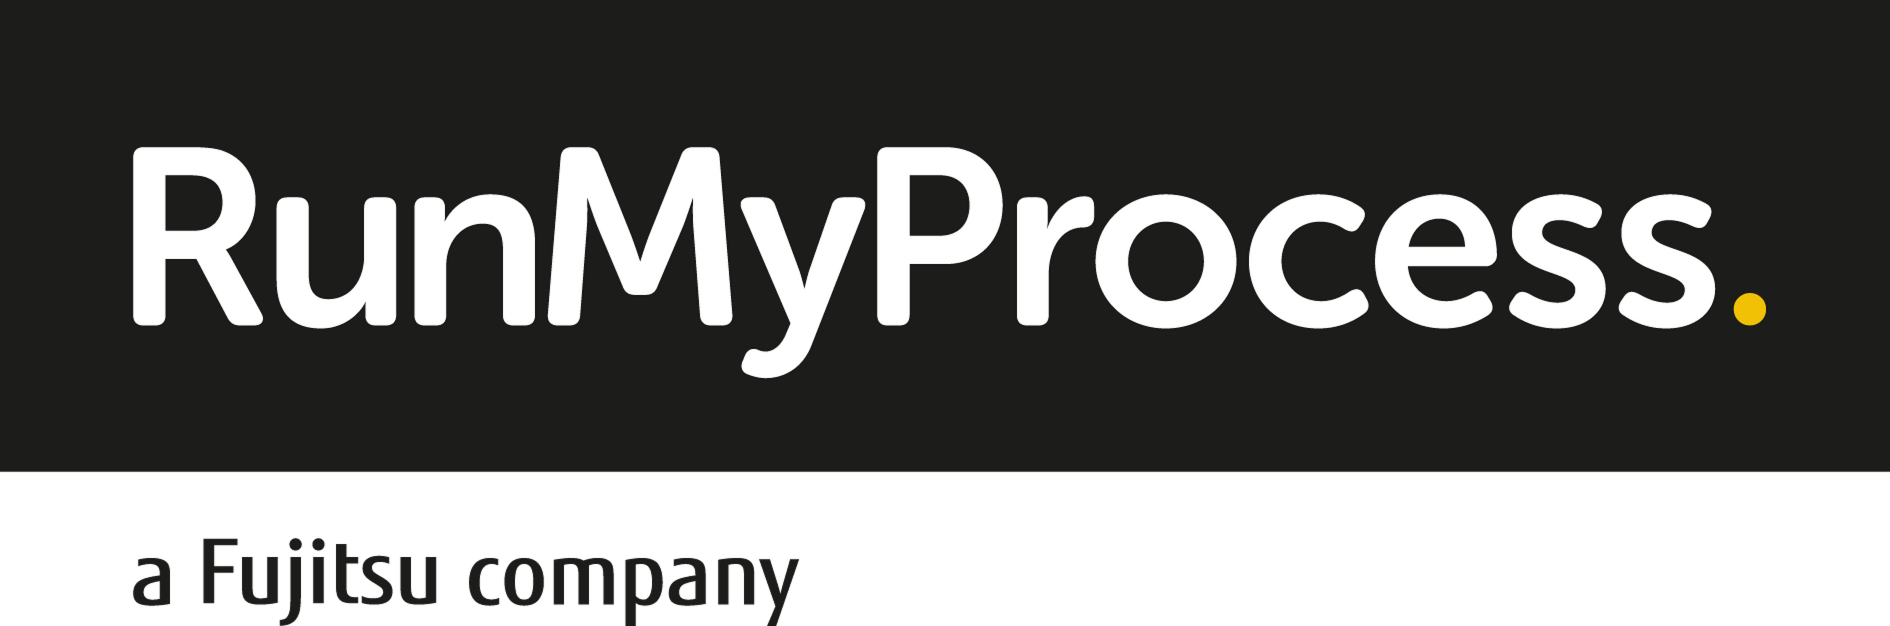 runMyProcess-logo